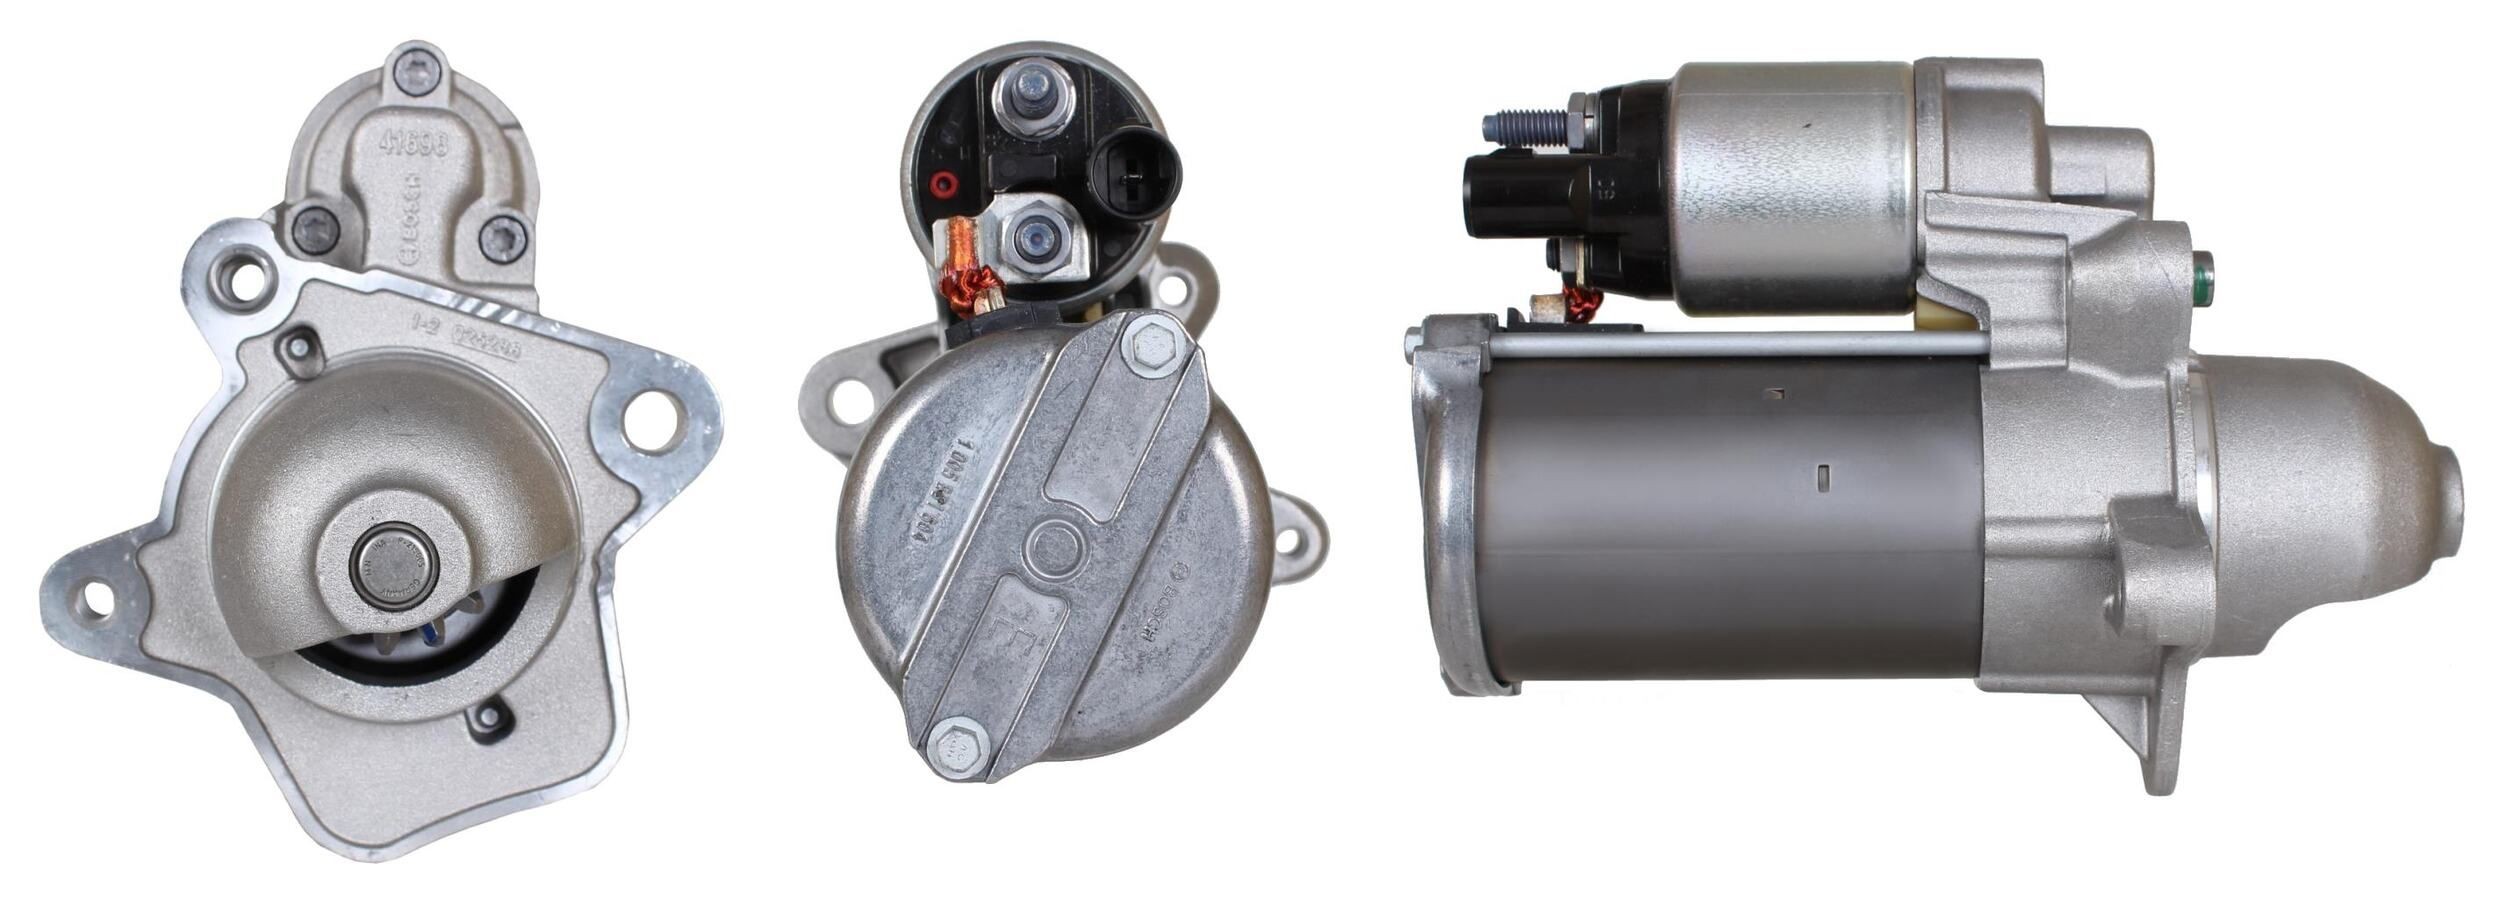 DRI 318231122 Starter motor ALFA ROMEO experience and price